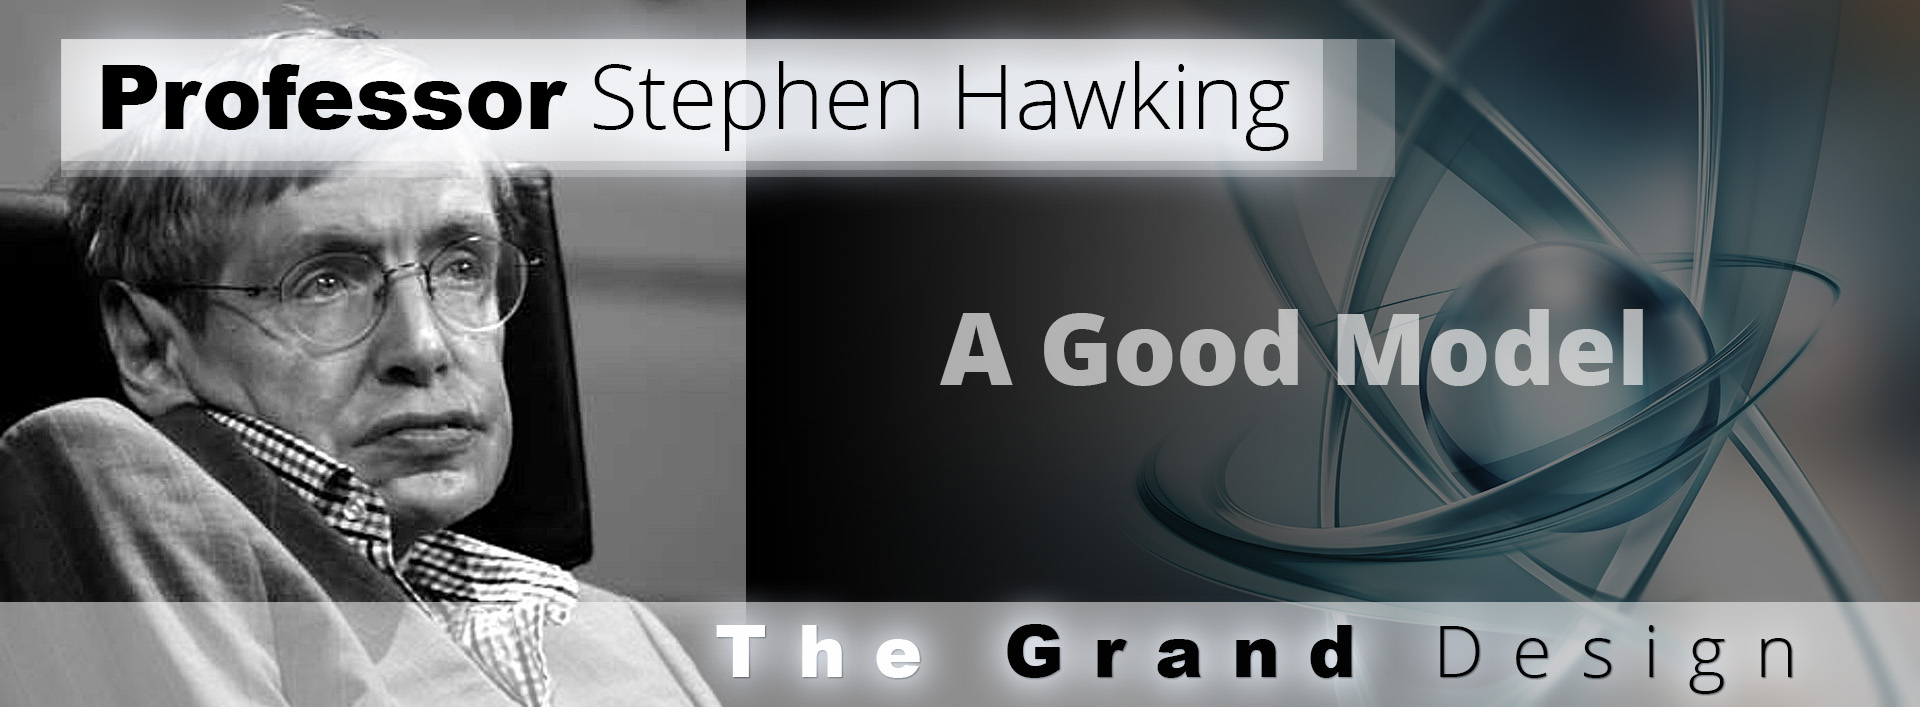 Professor-Stephen-Hawking__A-Good-Model__The-Grand-Design